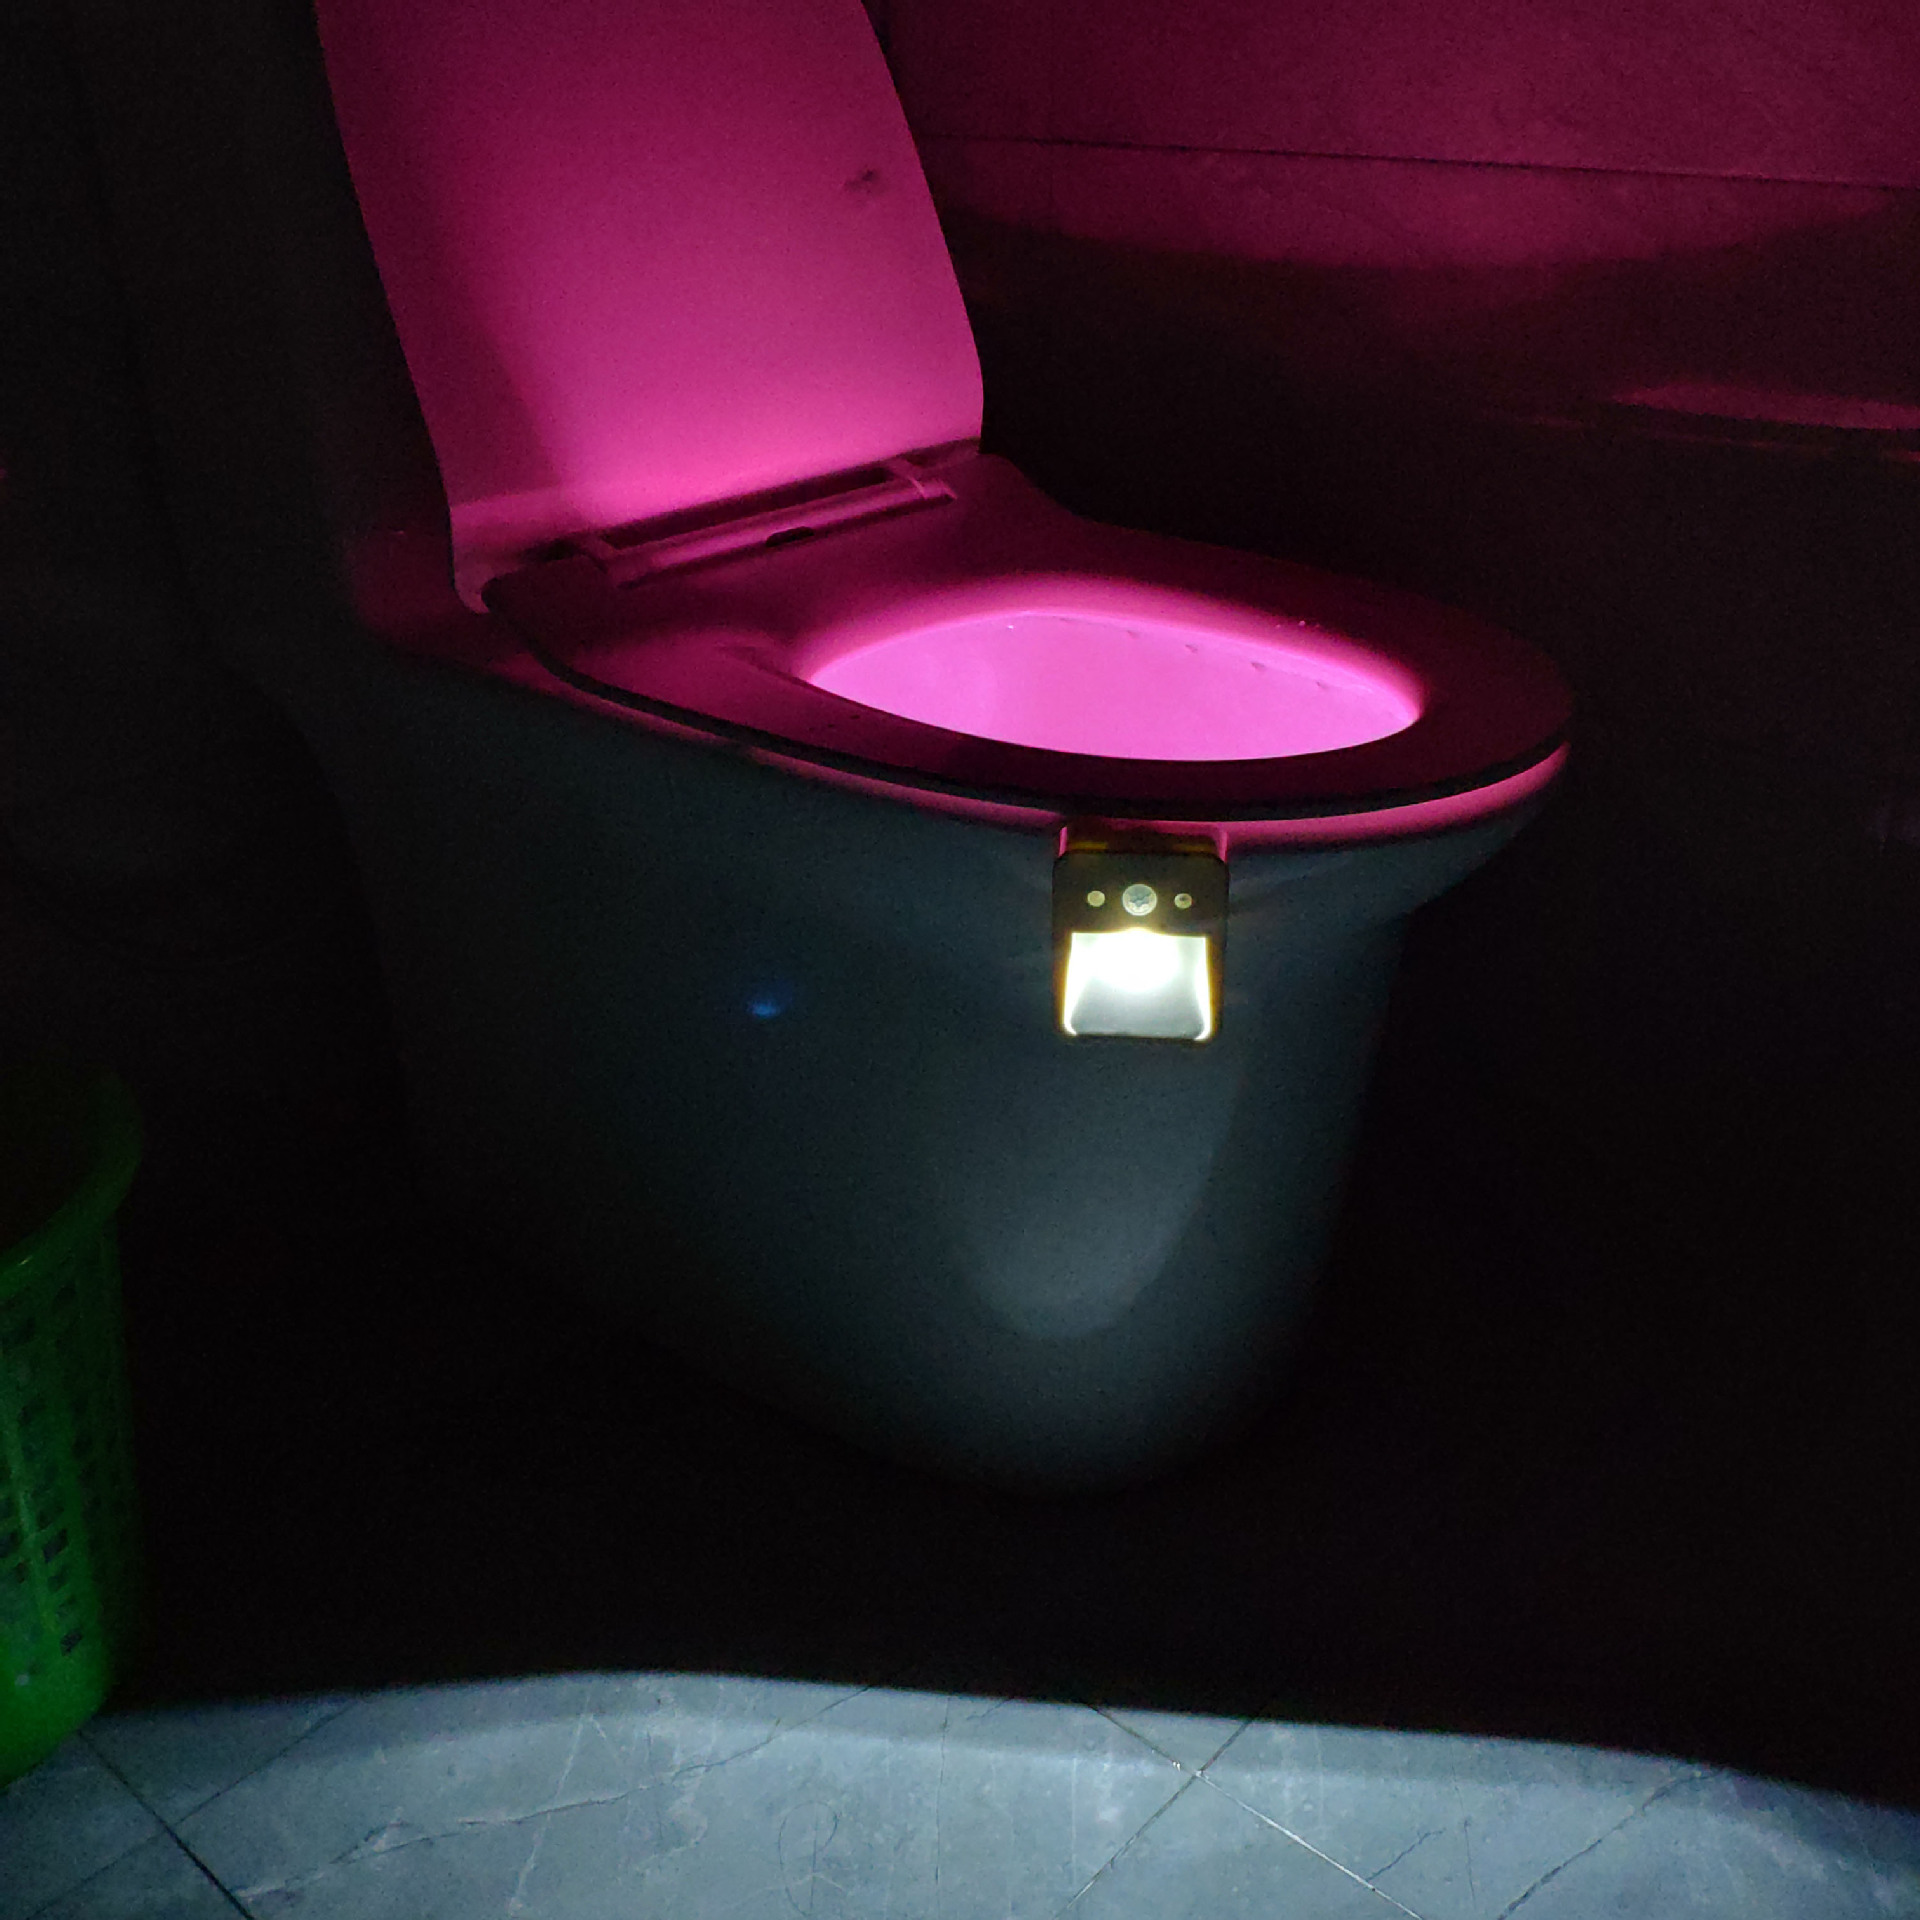 16-Colors-LED-Induction-Toilet-Light-With-Aromatherapy-Toilet-Sensor-Night-Light-Decor-1754296-7